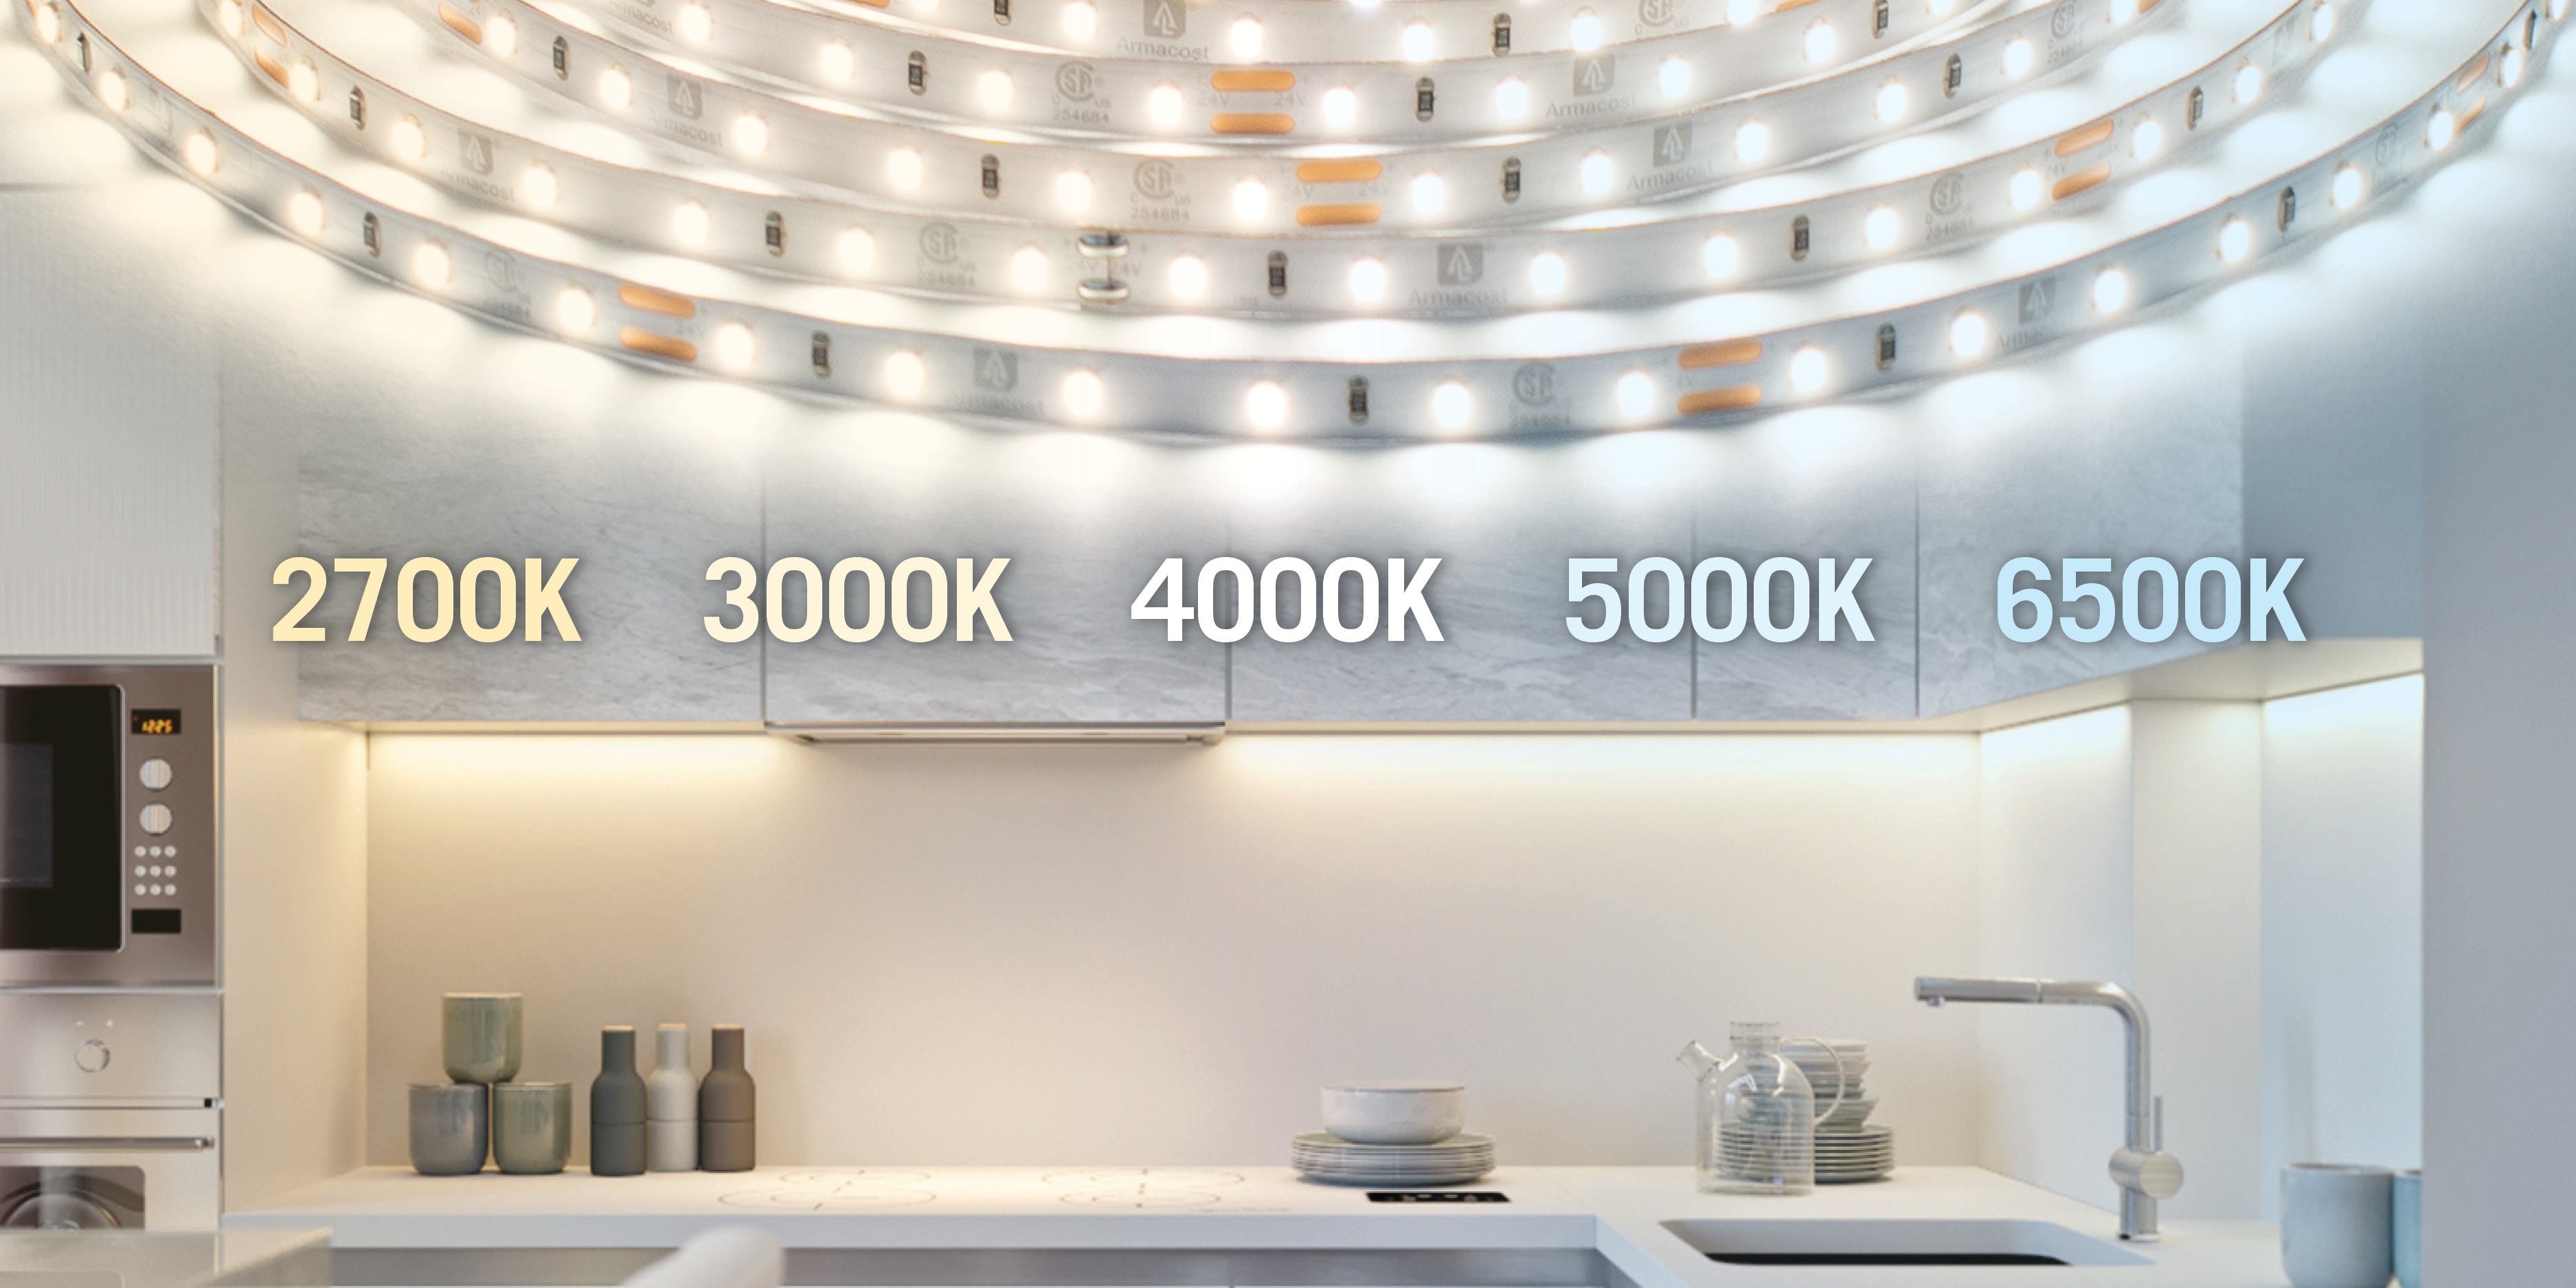 3000k light temperature for kitchen